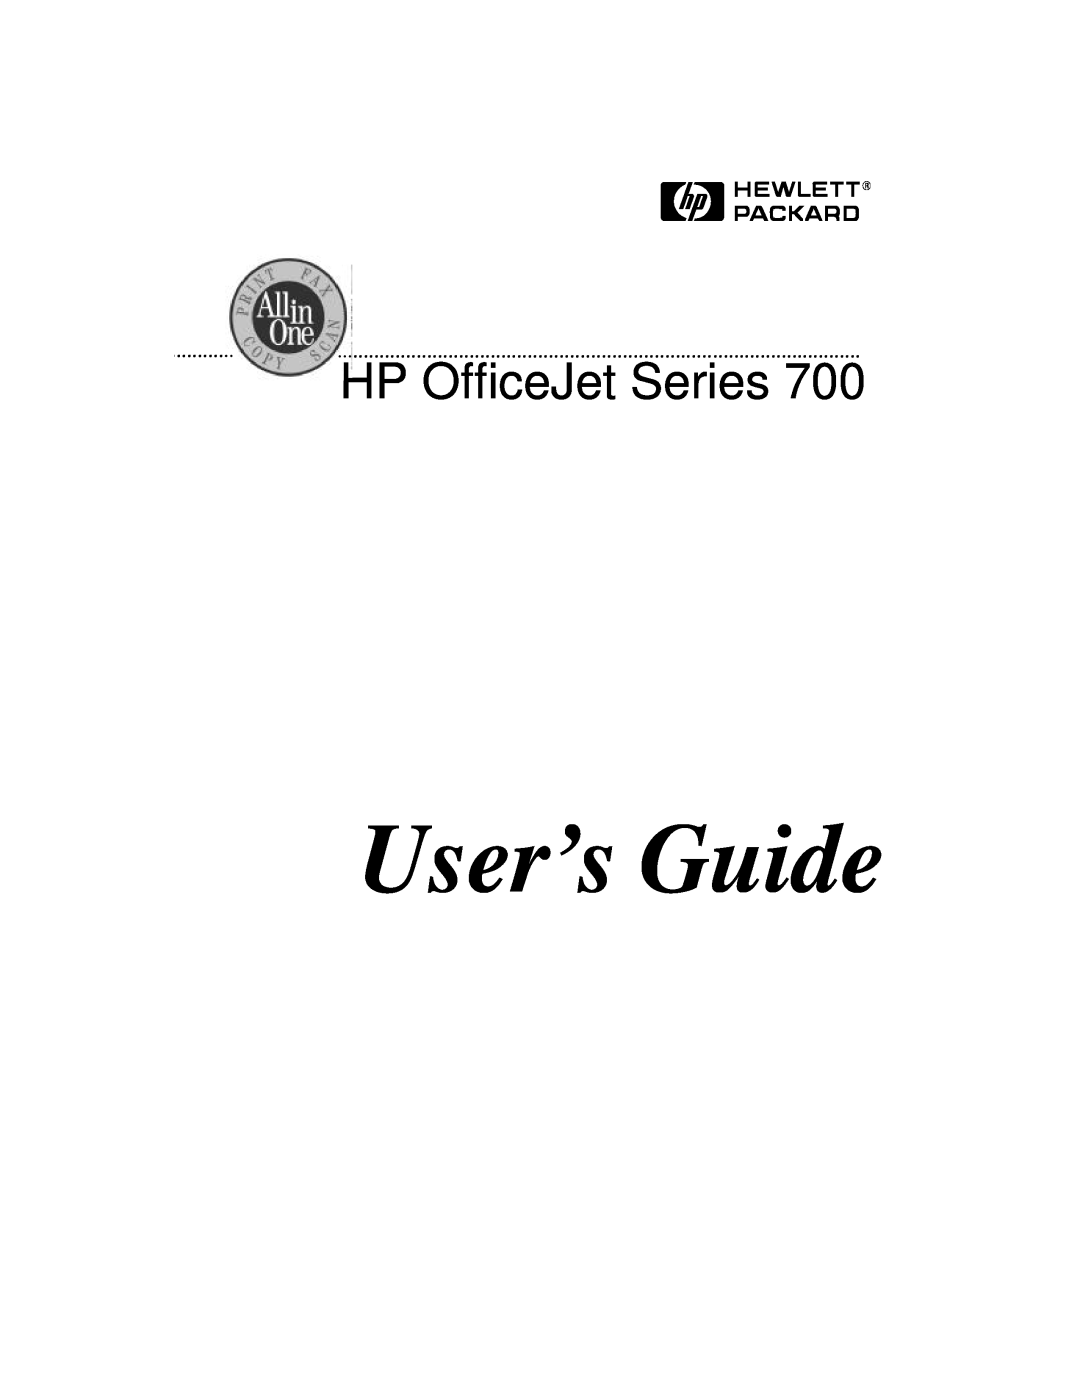 HP 700 manual User’s Guide, HP OfficeJet Series 